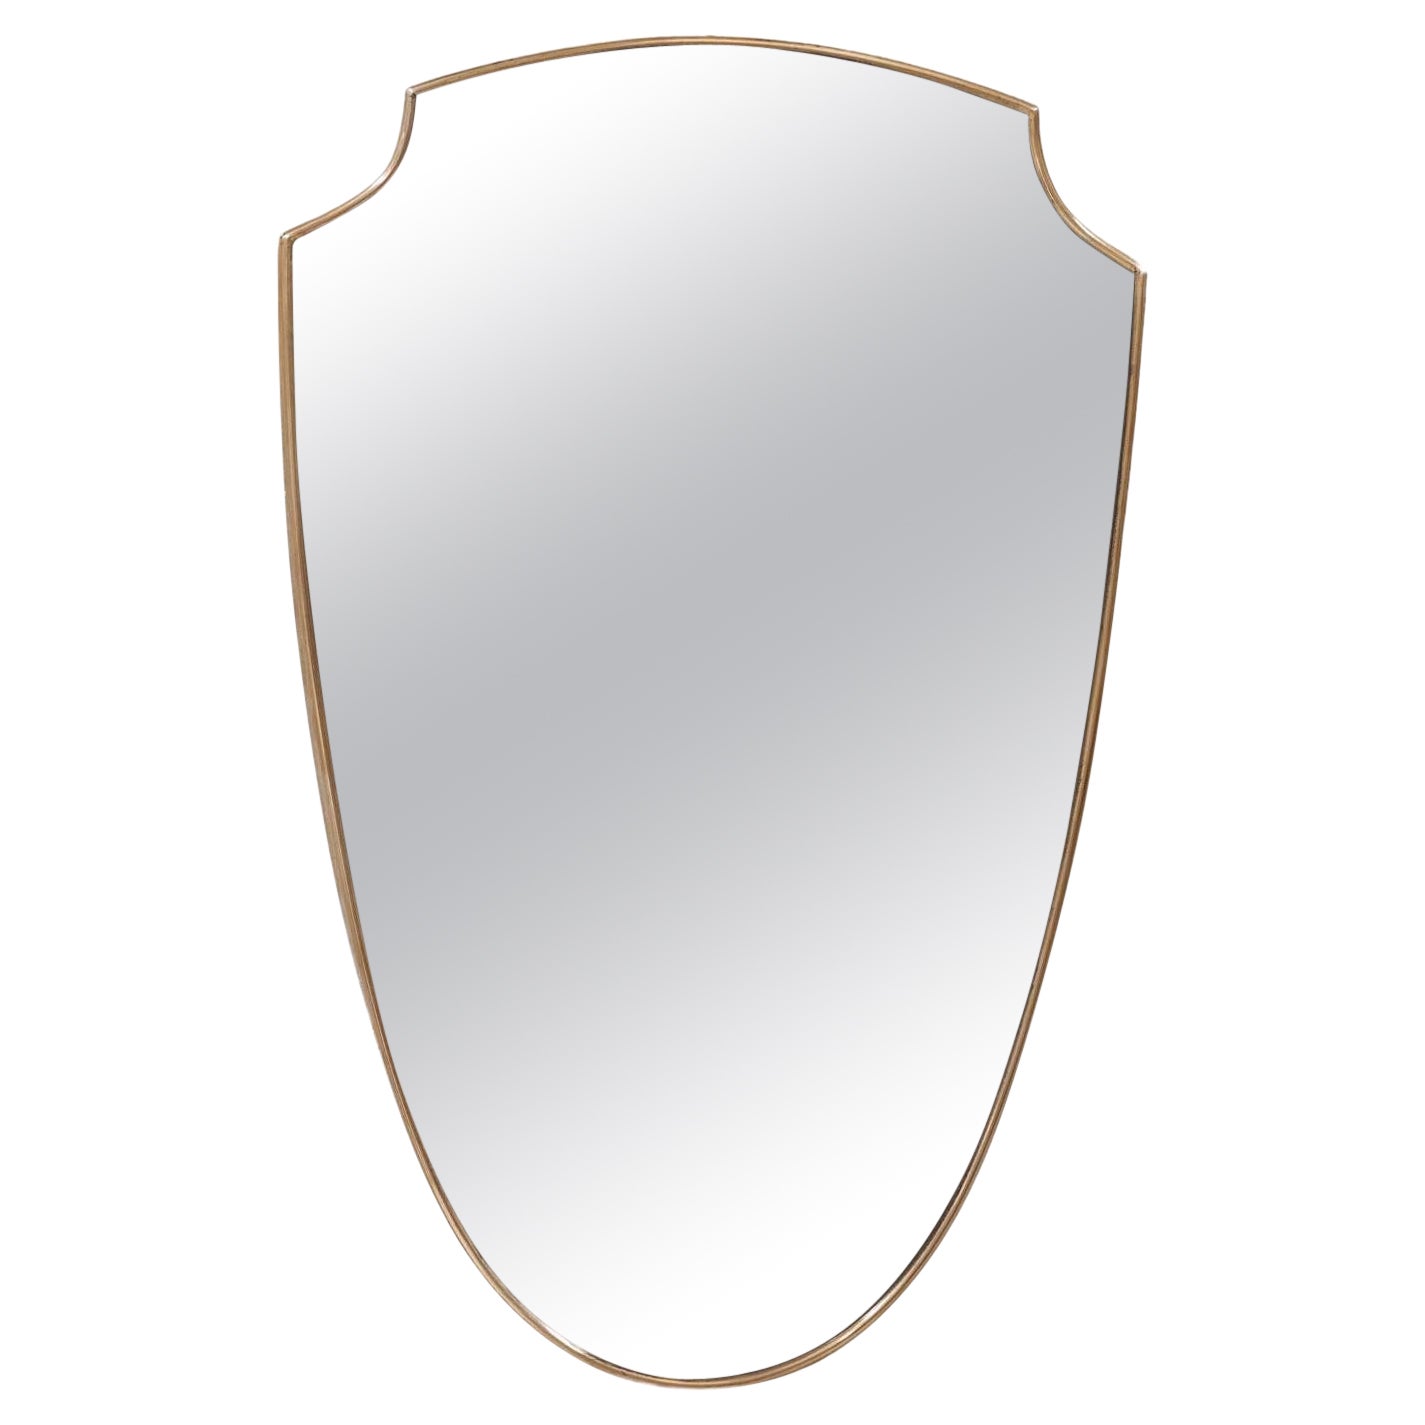 Midcentury italian brass wall mirror in the style of Gio Ponti